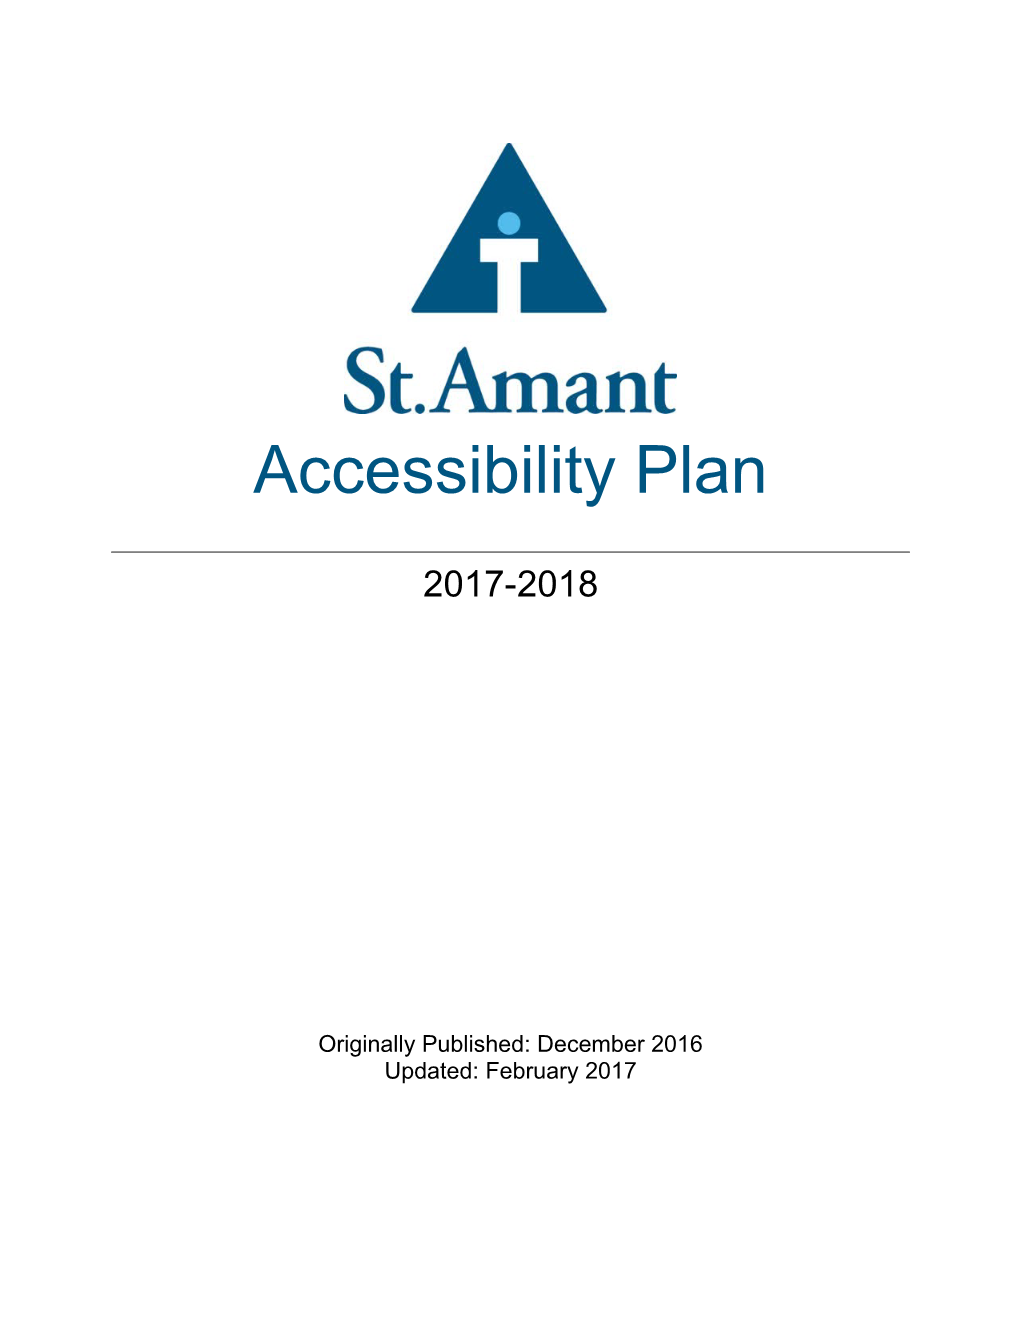 St.Amant Accessibility Plan